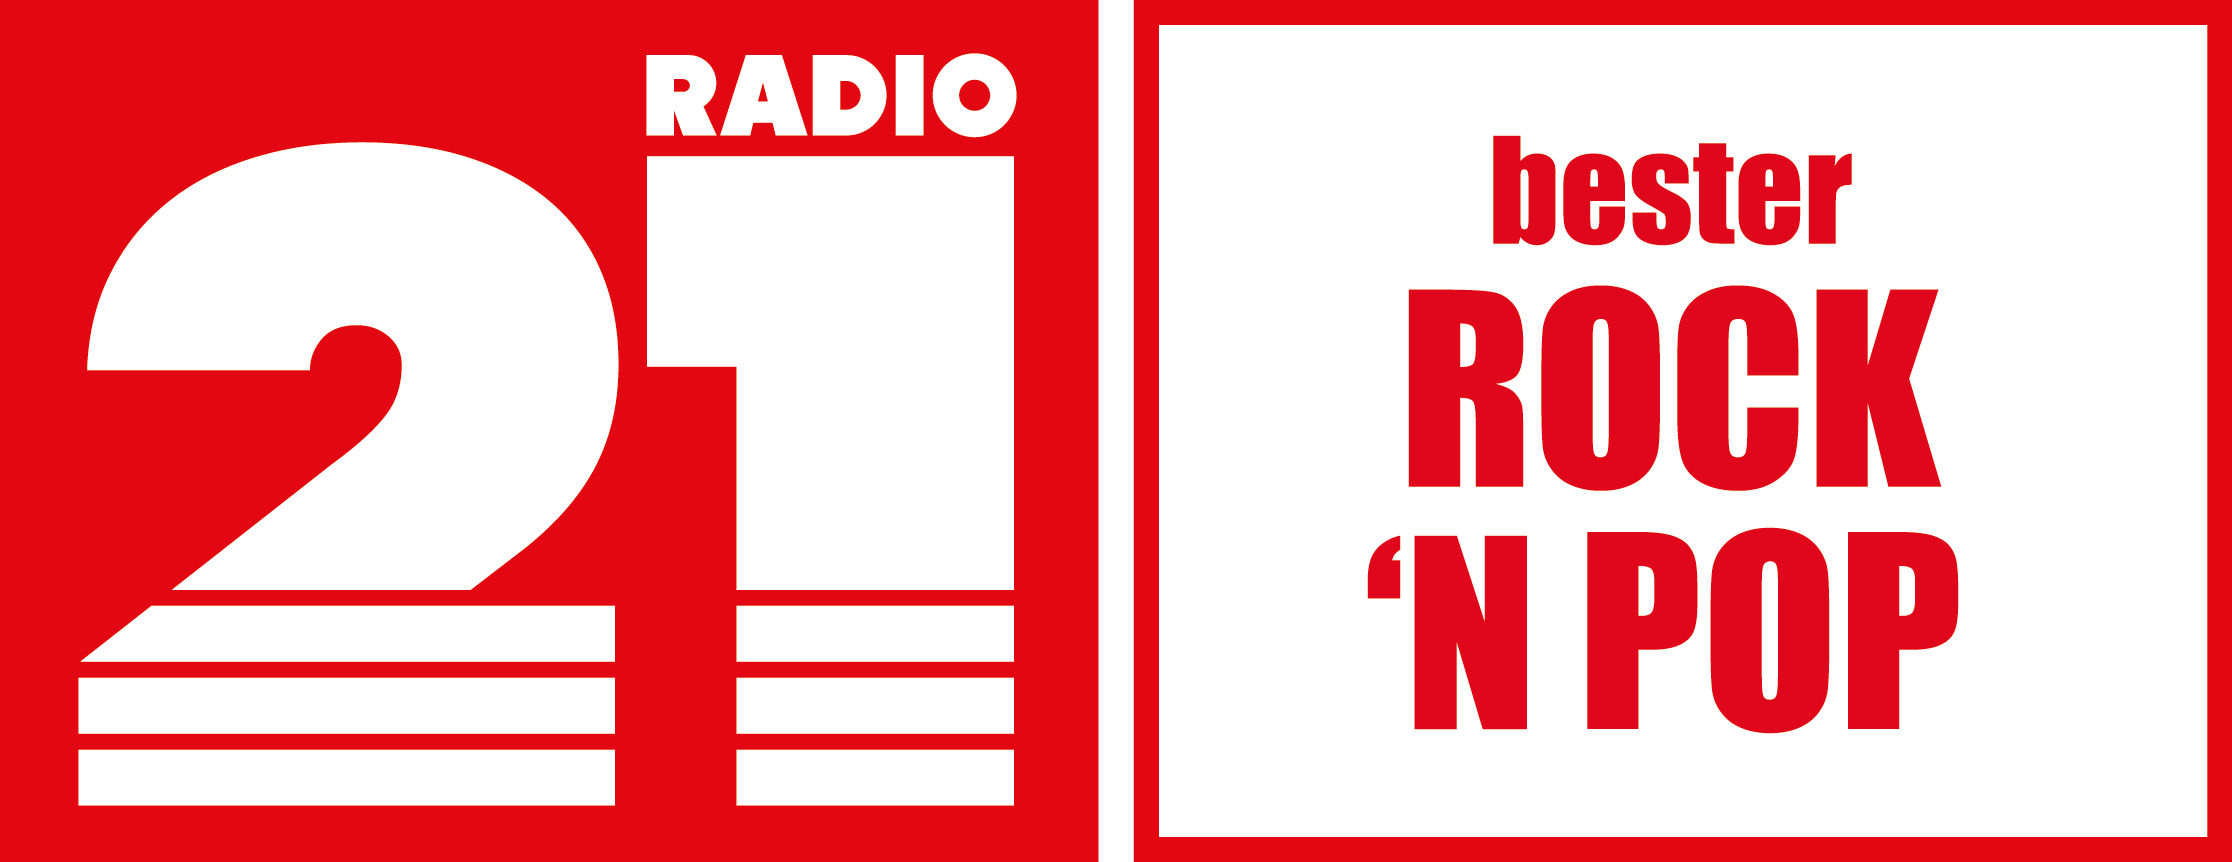 Radio 21 Bremen